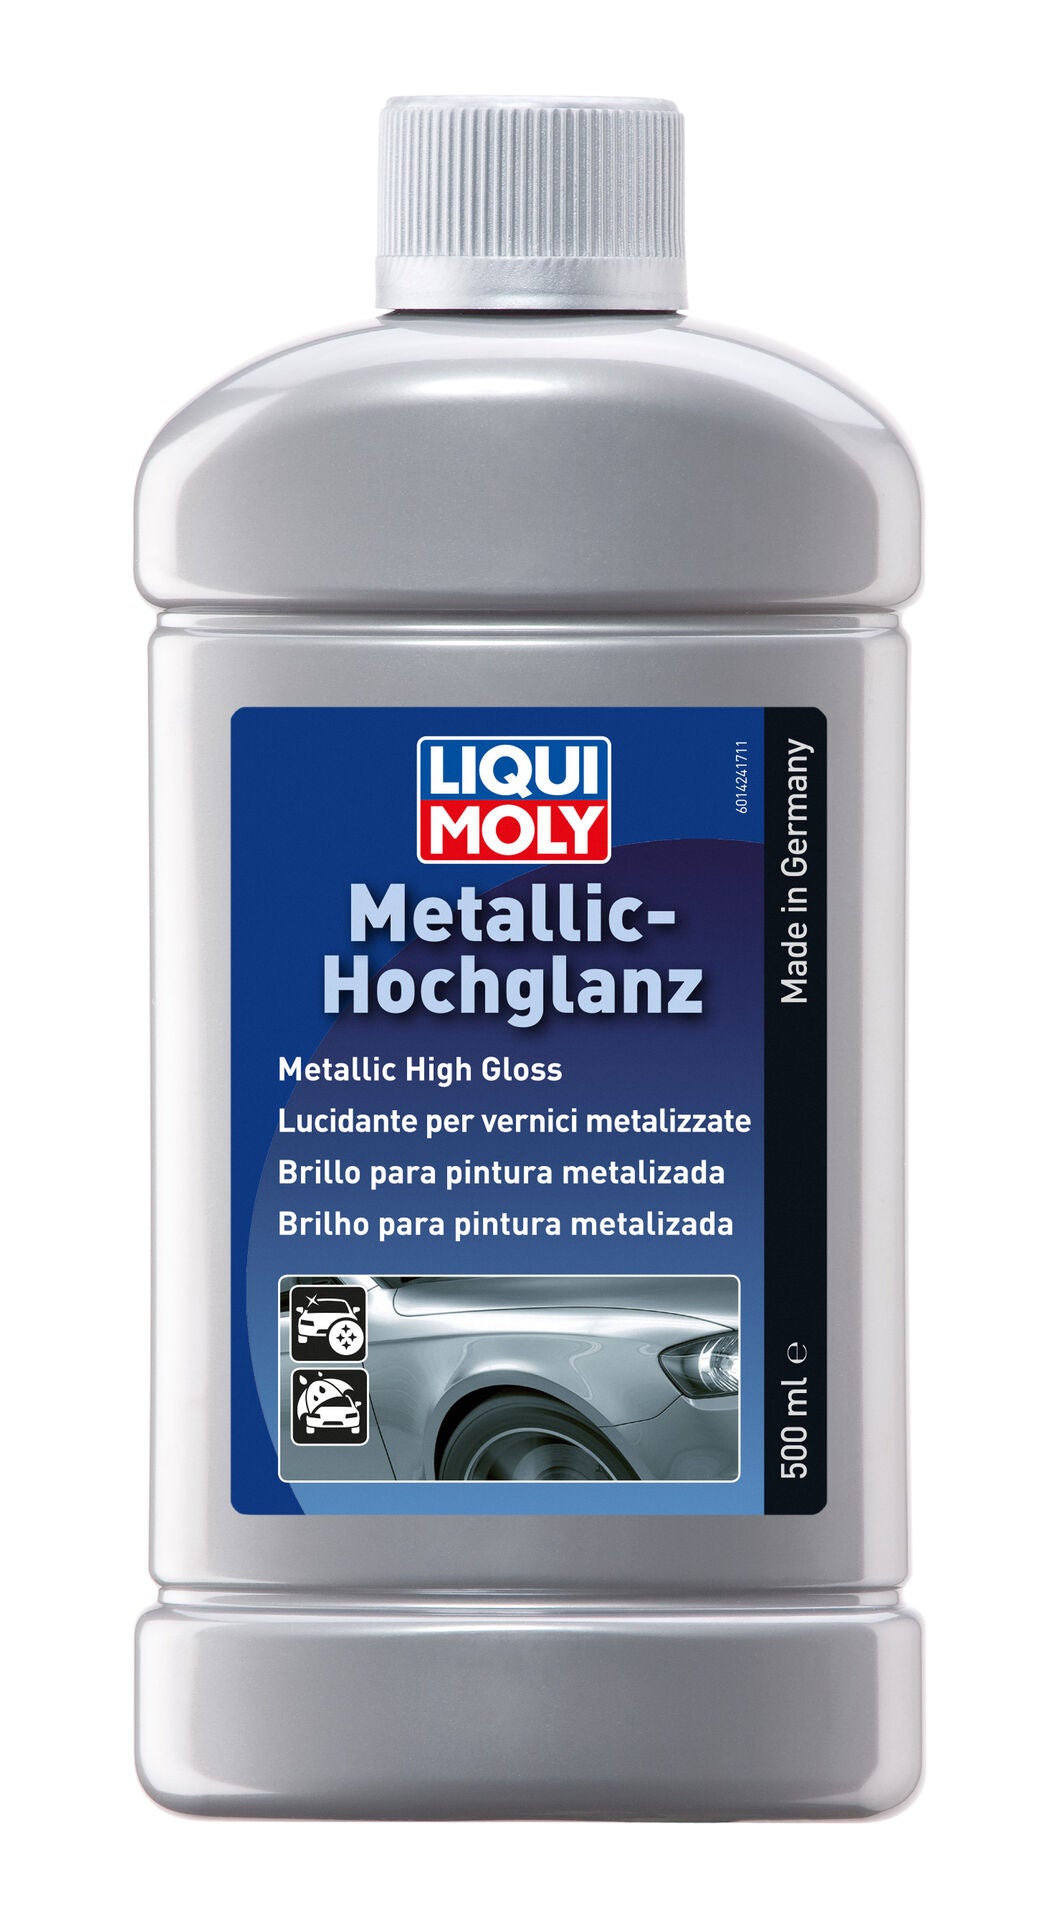 Metalic- Hochglanz